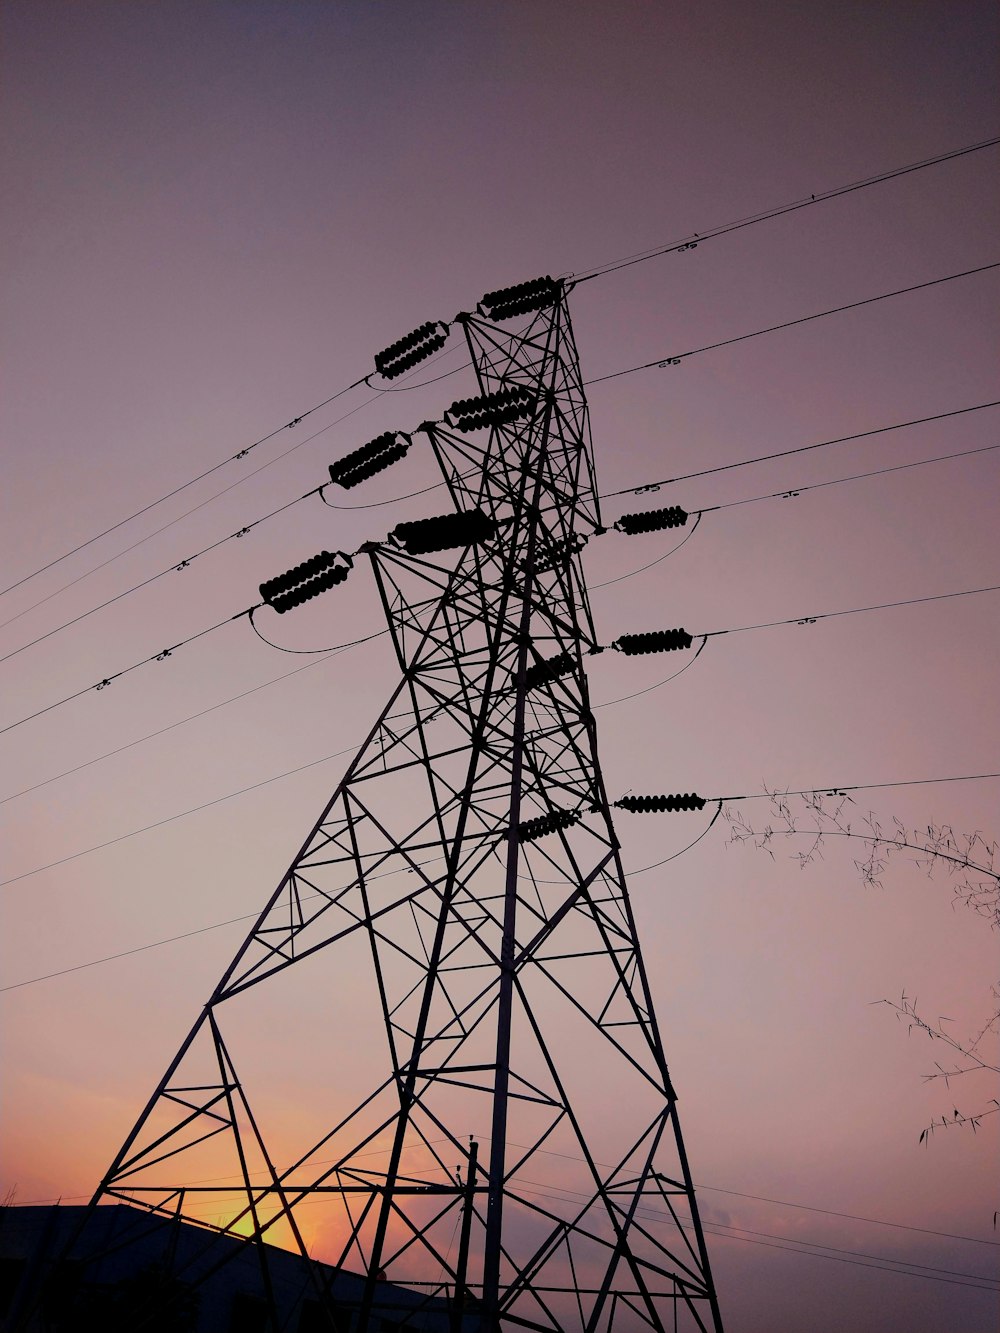 grey power transmission tower under purple sunset sky